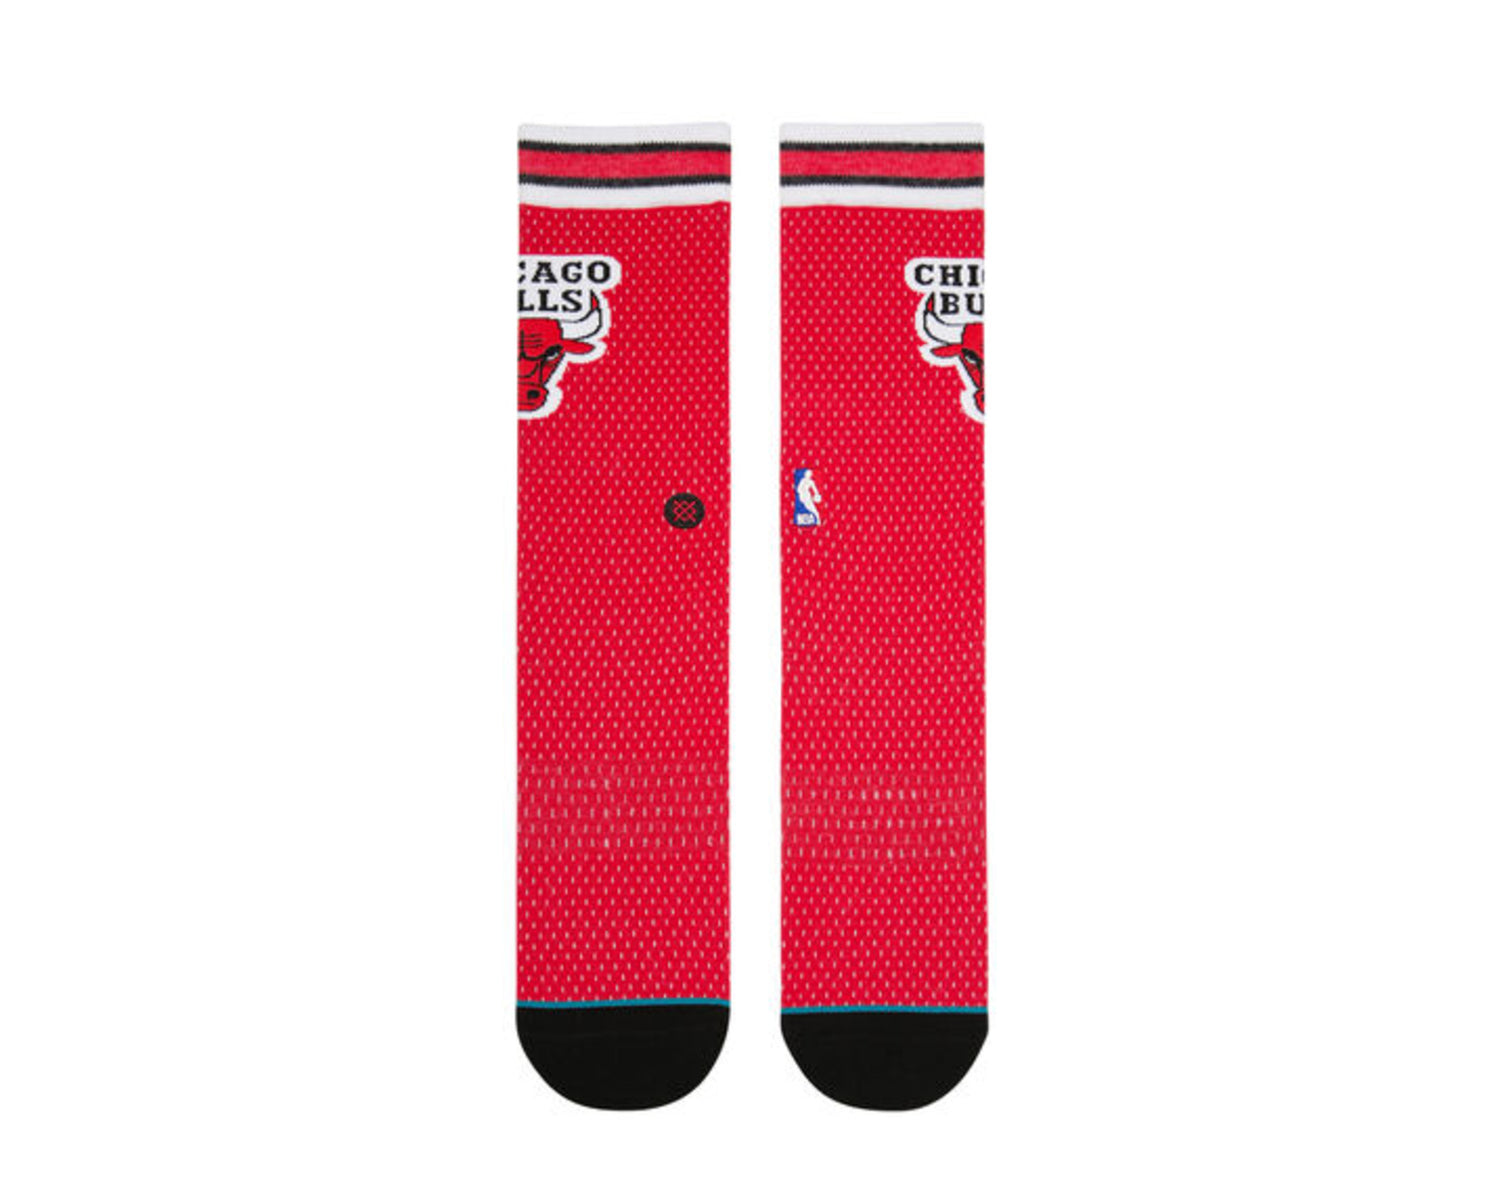 Stance Casual NBA Chicago Bulls Jersey Crew Socks